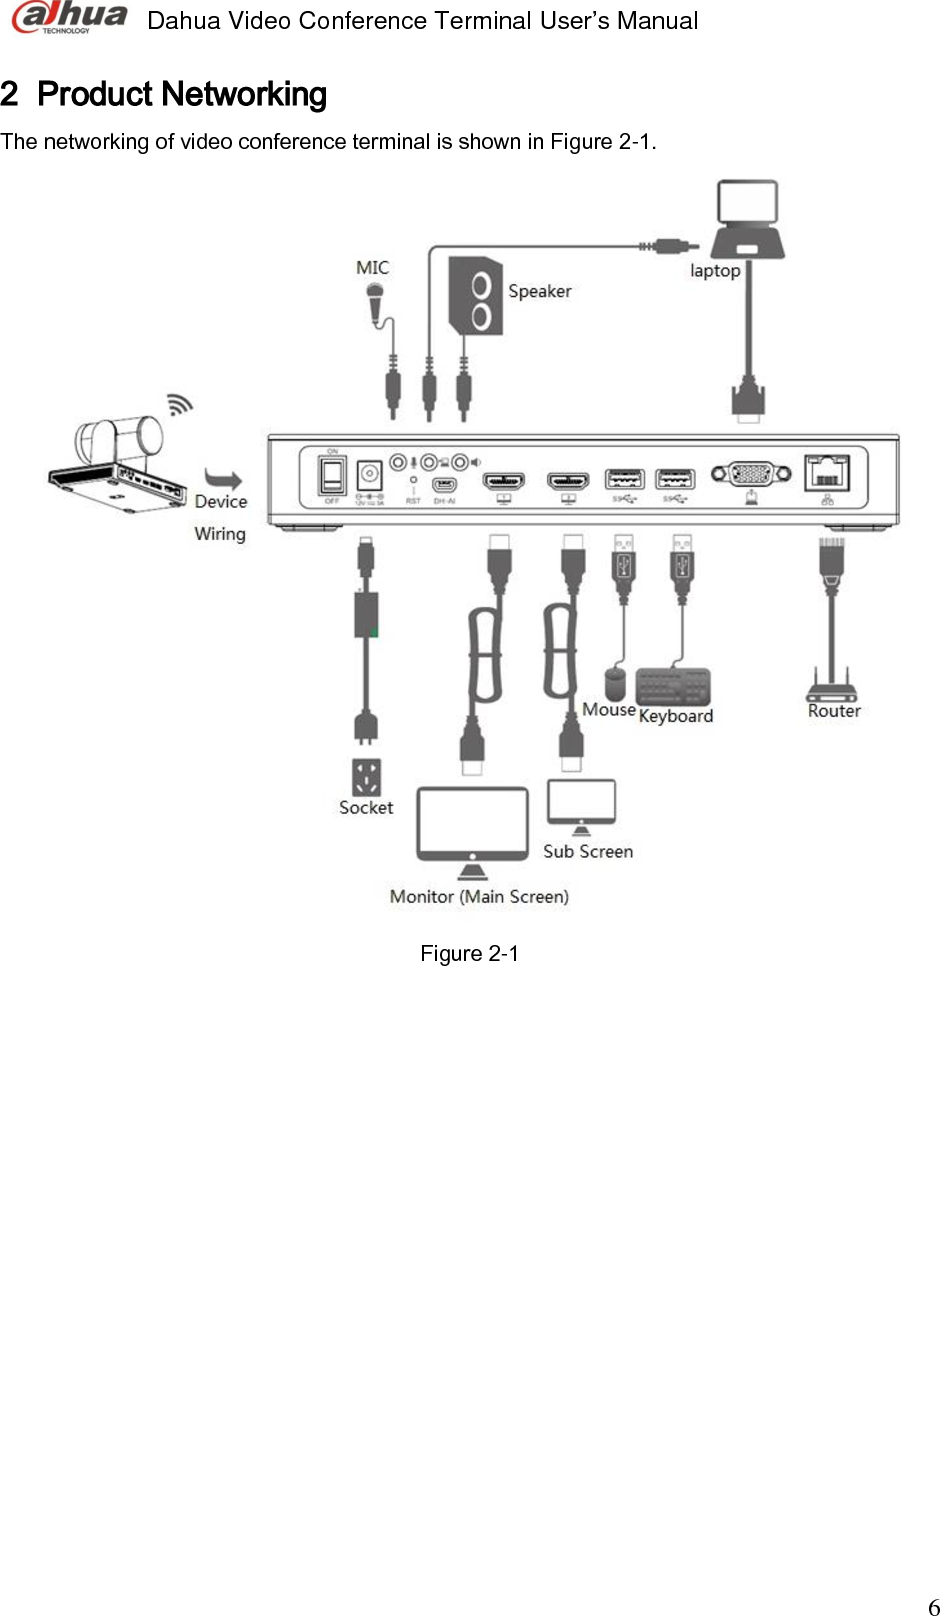  Dahua Video Conference Terminal User’s Manual                                                                              6 2 Product Networking  The networking of video conference terminal is shown in Figure 2-1.   Figure 2-1               